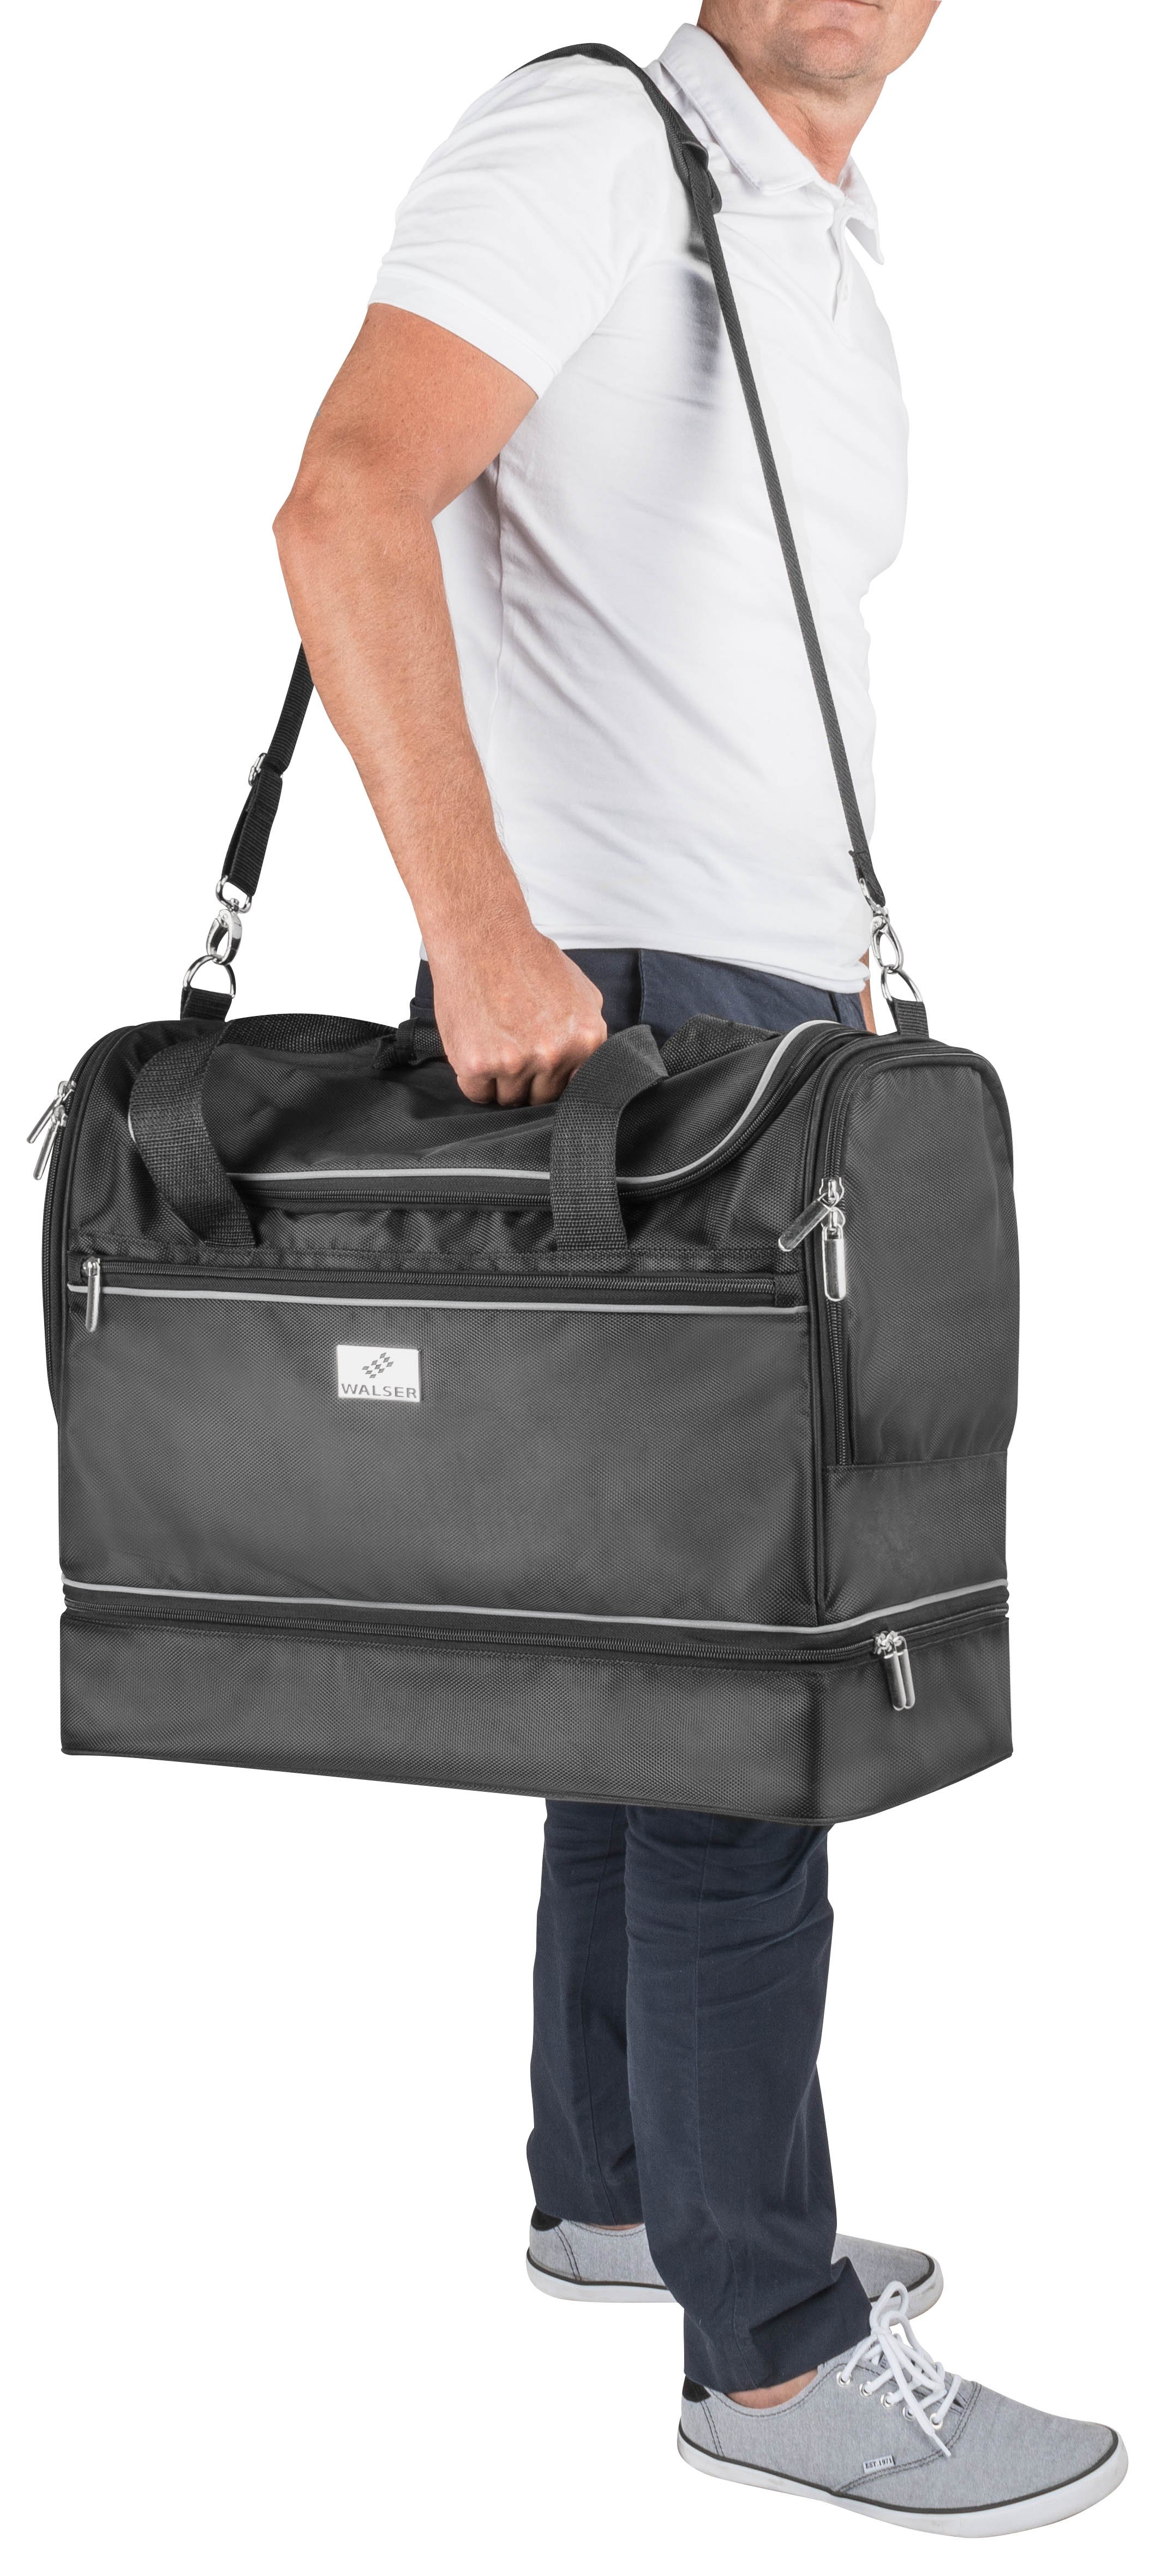 Carbags sports bag 50L - 35x30x45cm